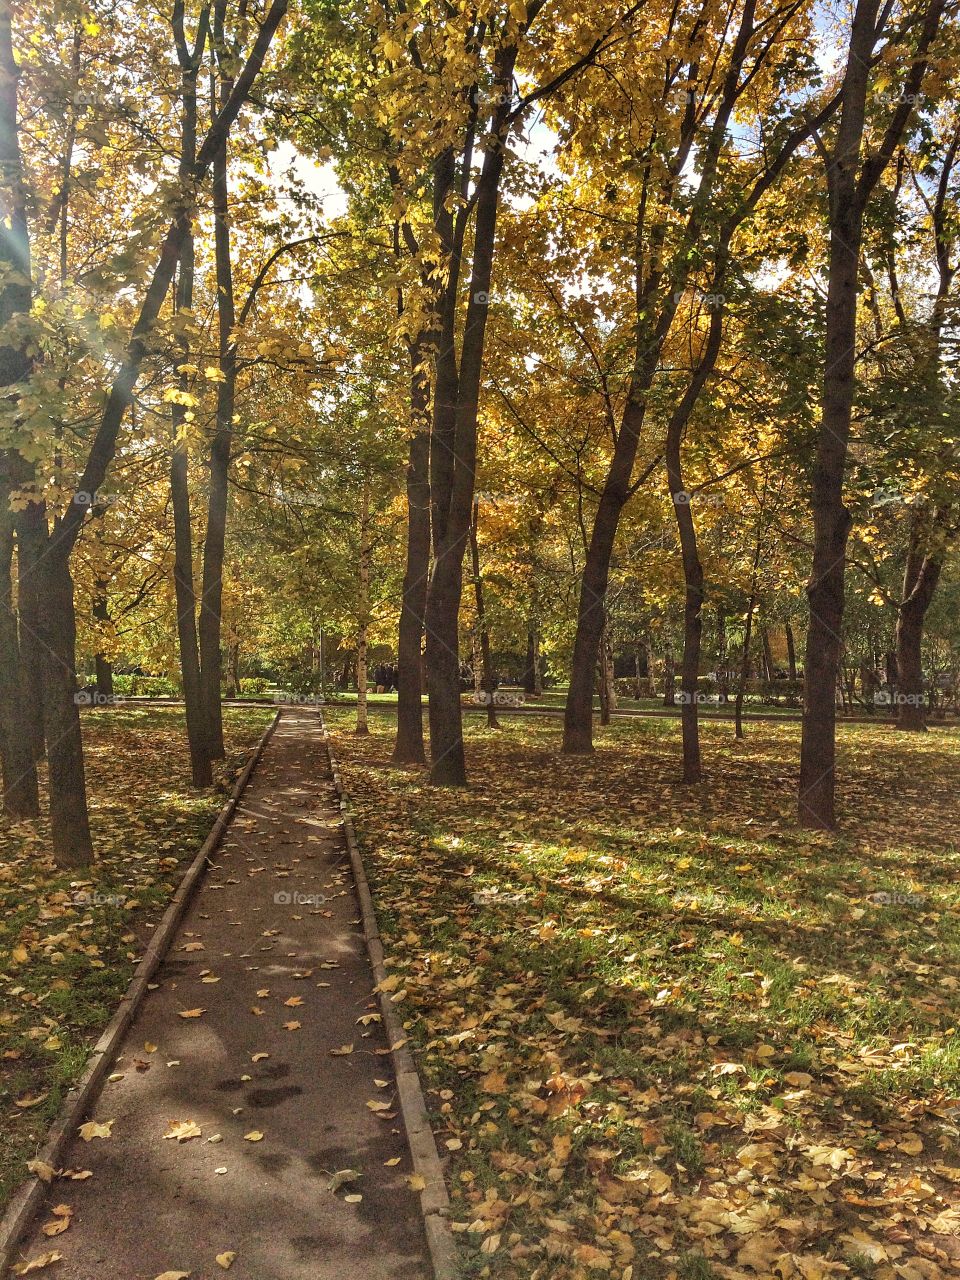 Strolling through the autumn park